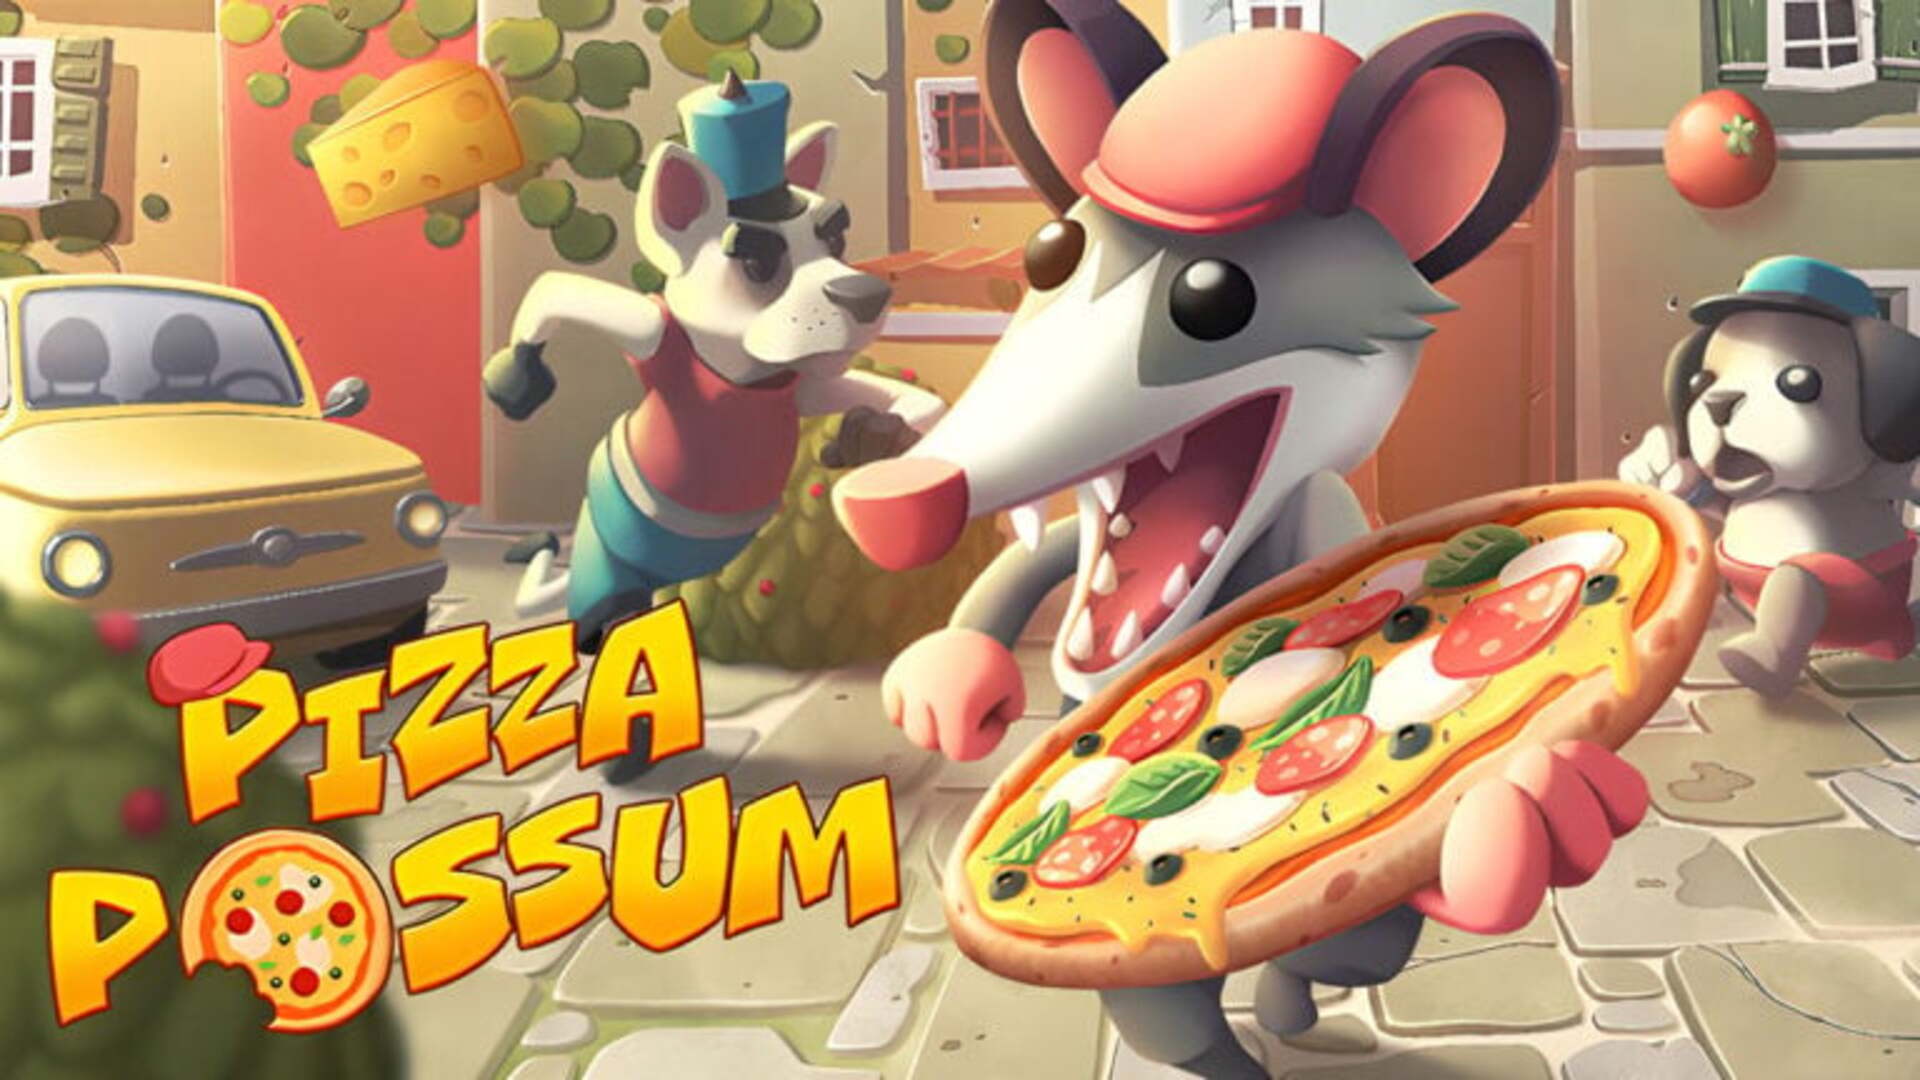 Cosy Computer Pizza Possum